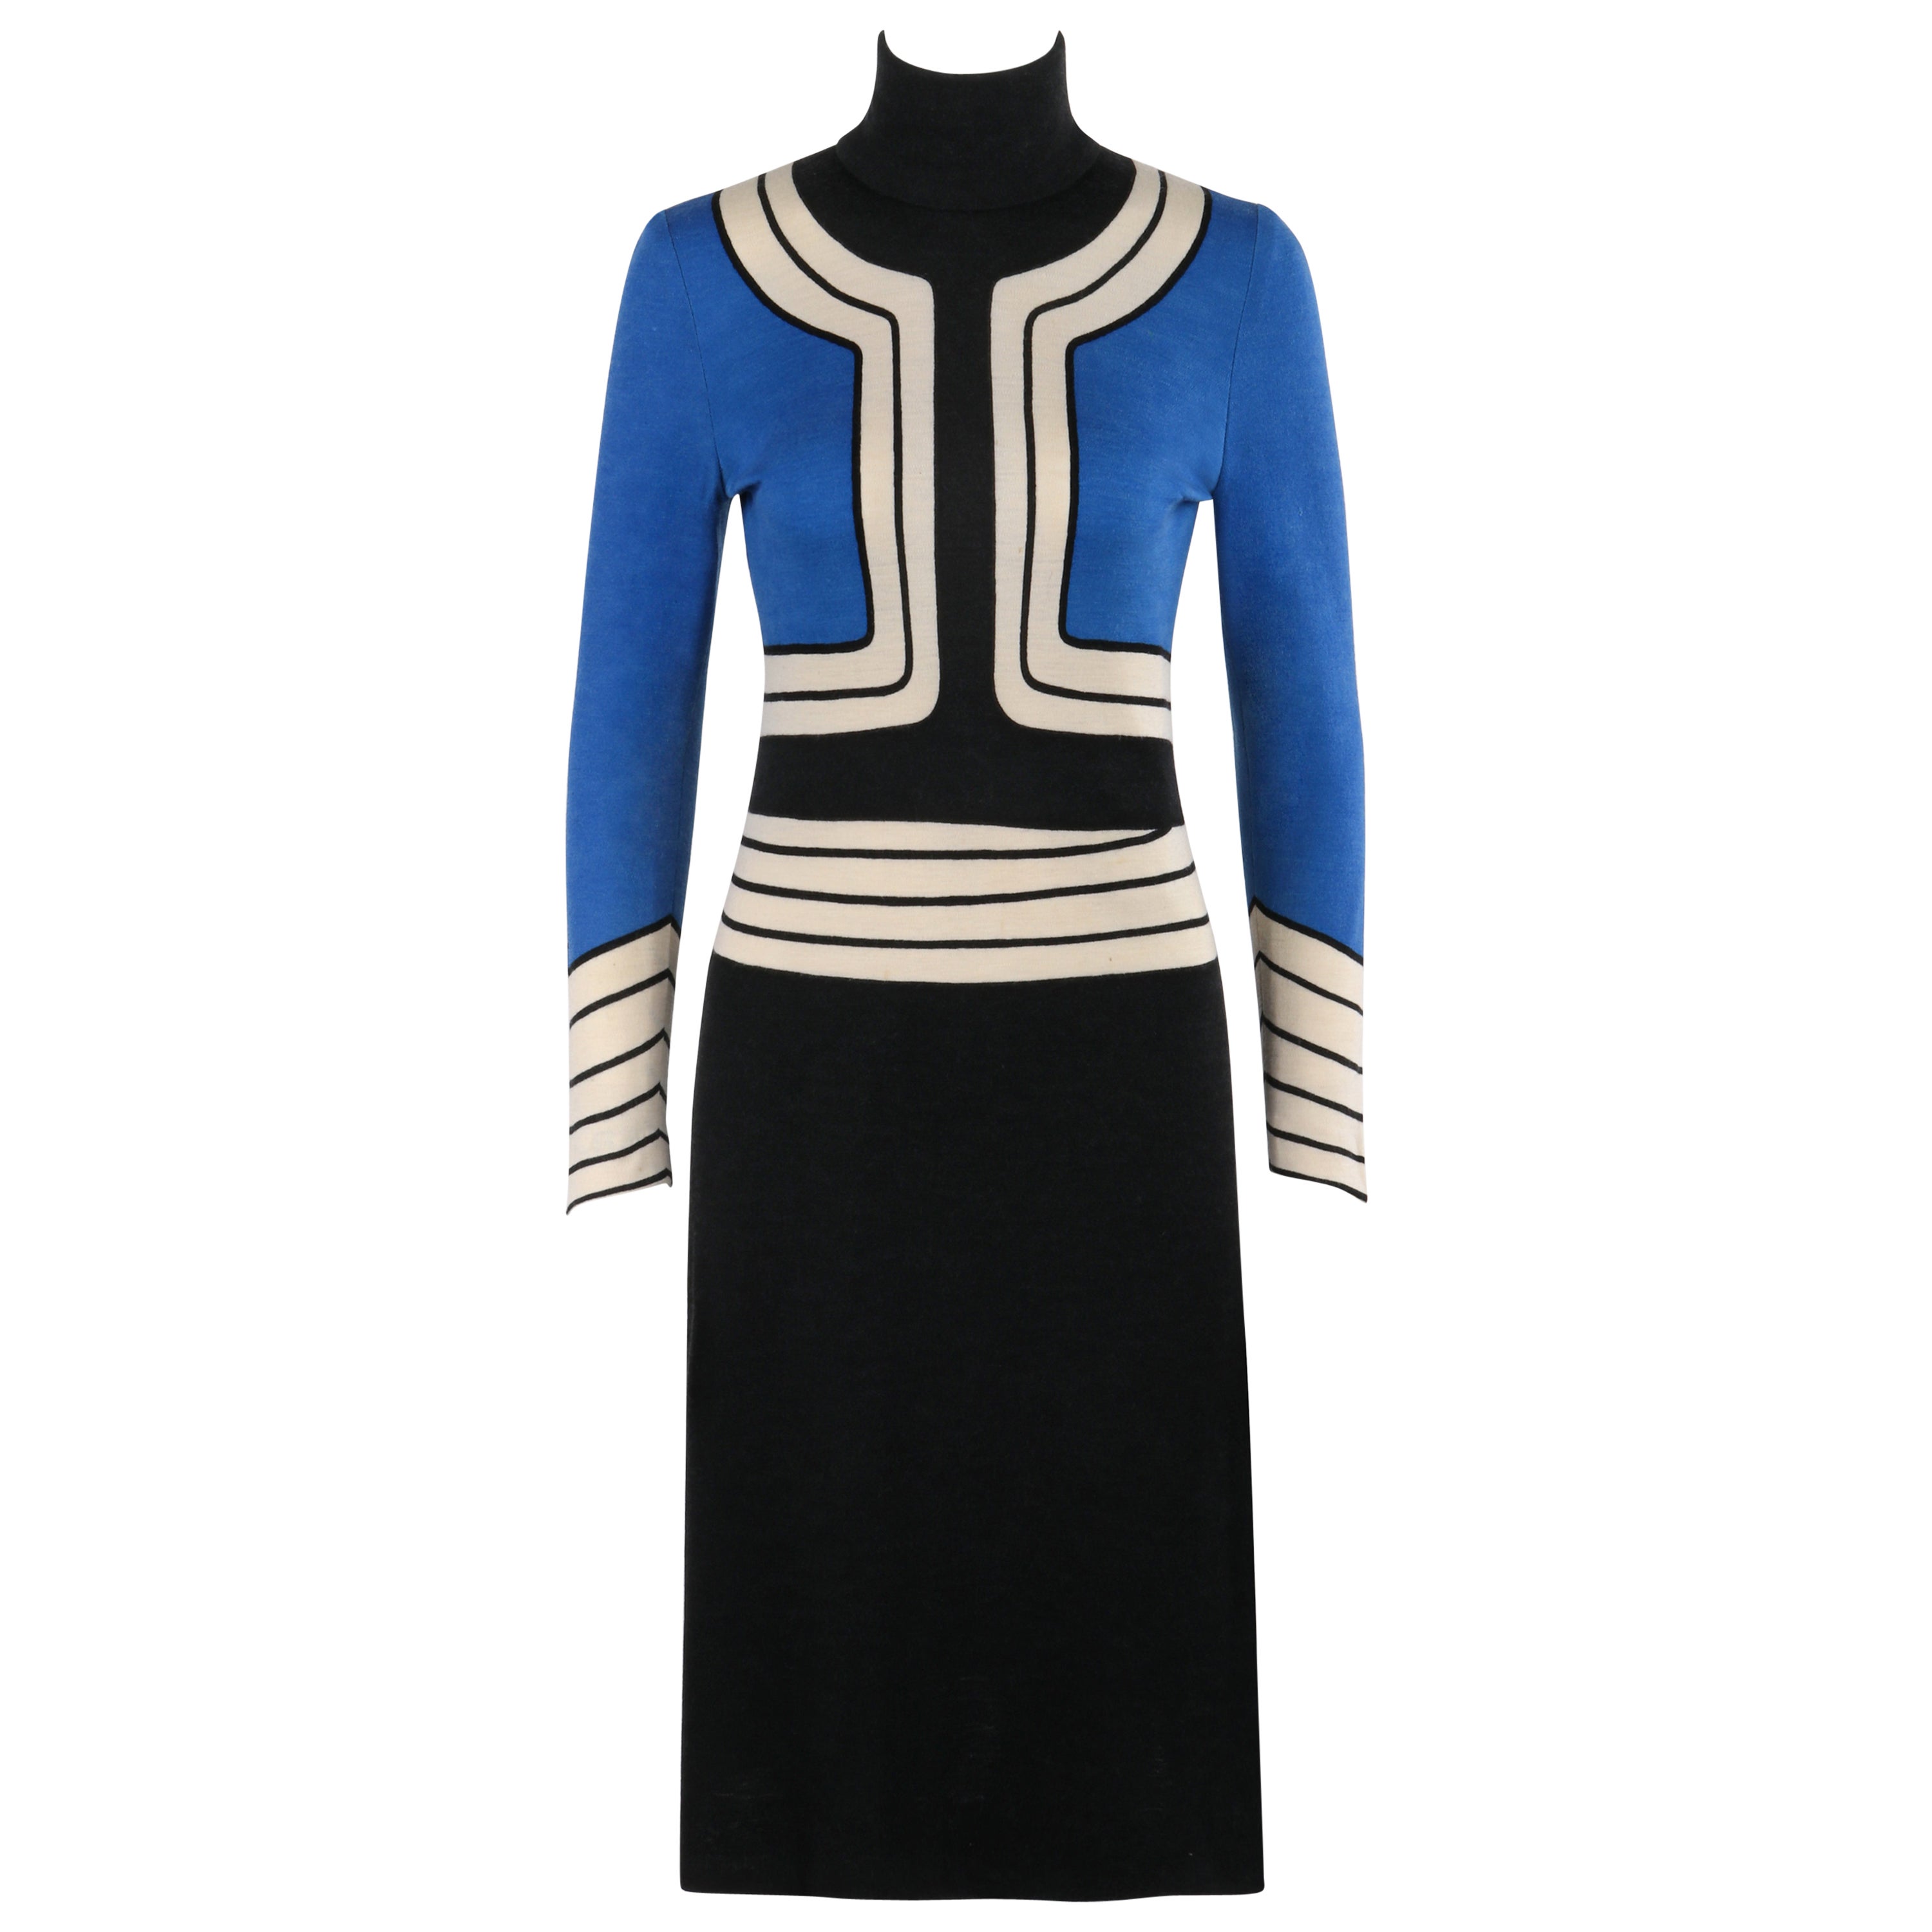 ROBERTA DI CAMERINO c.1960s Blue Black Stretch Knit Geometric Turtleneck Dress For Sale